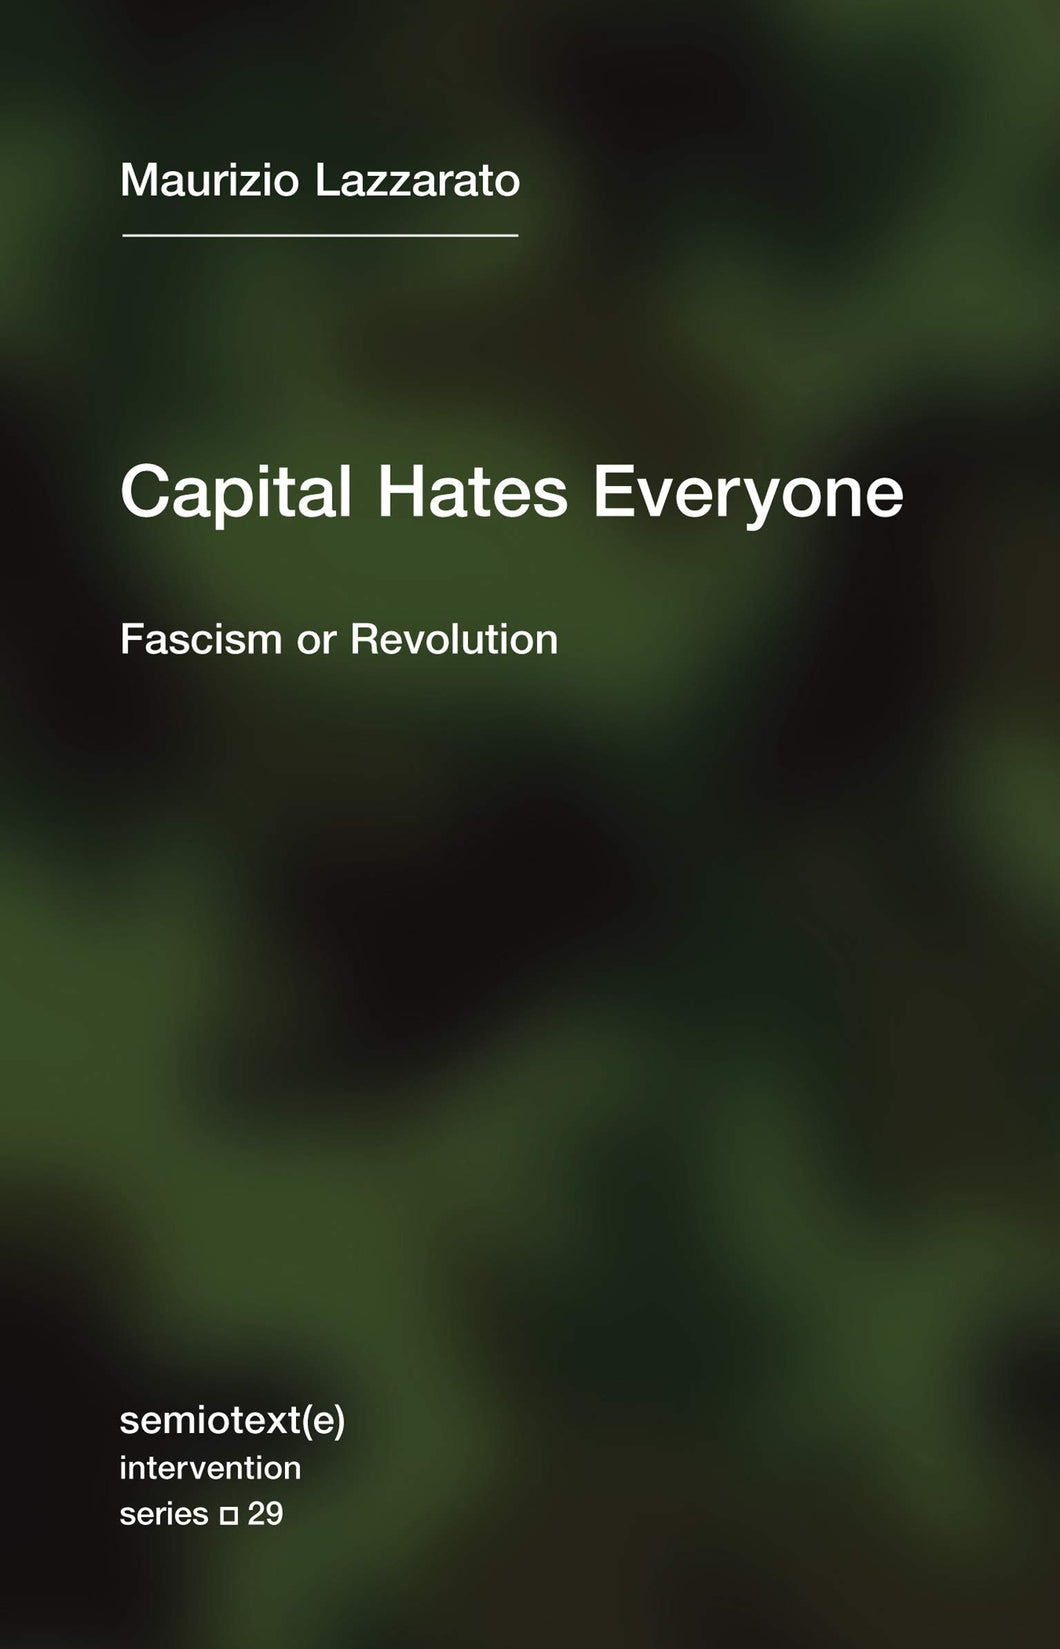 Capital Hates Everyone : Fascism or Revolution ร้านหนังสือและสิ่งของ เป็นร้านหนังสือภาษาอังกฤษหายาก และร้านกาแฟ หรือ บุ๊คคาเฟ่ ตั้งอยู่สุขุมวิท กรุงเทพ